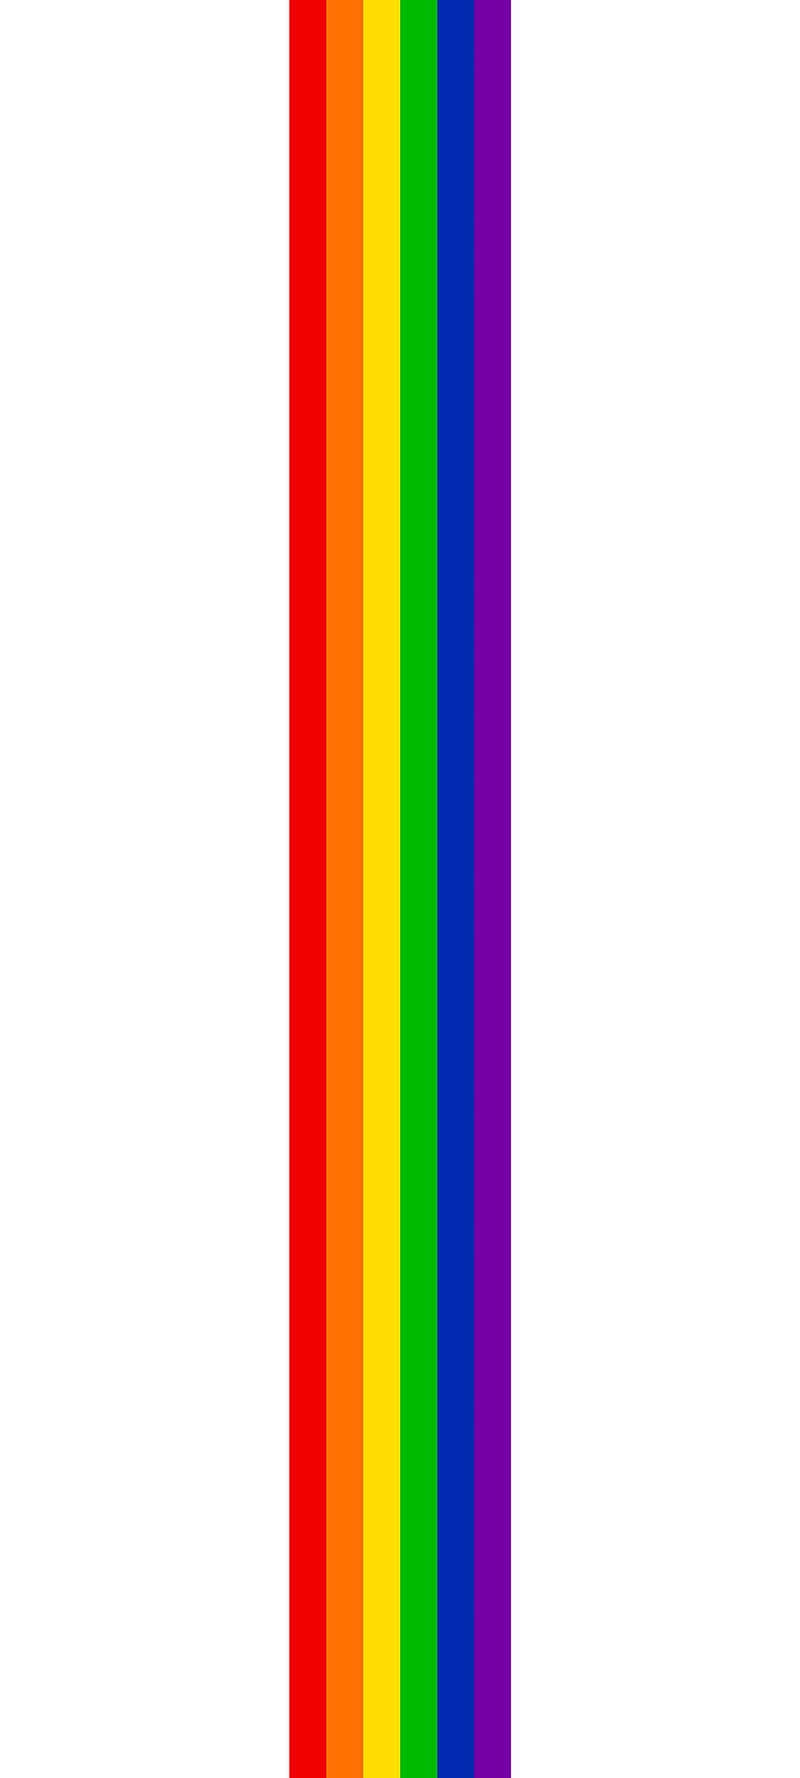 Three interlaced rainbow stripes representing the Pride flag